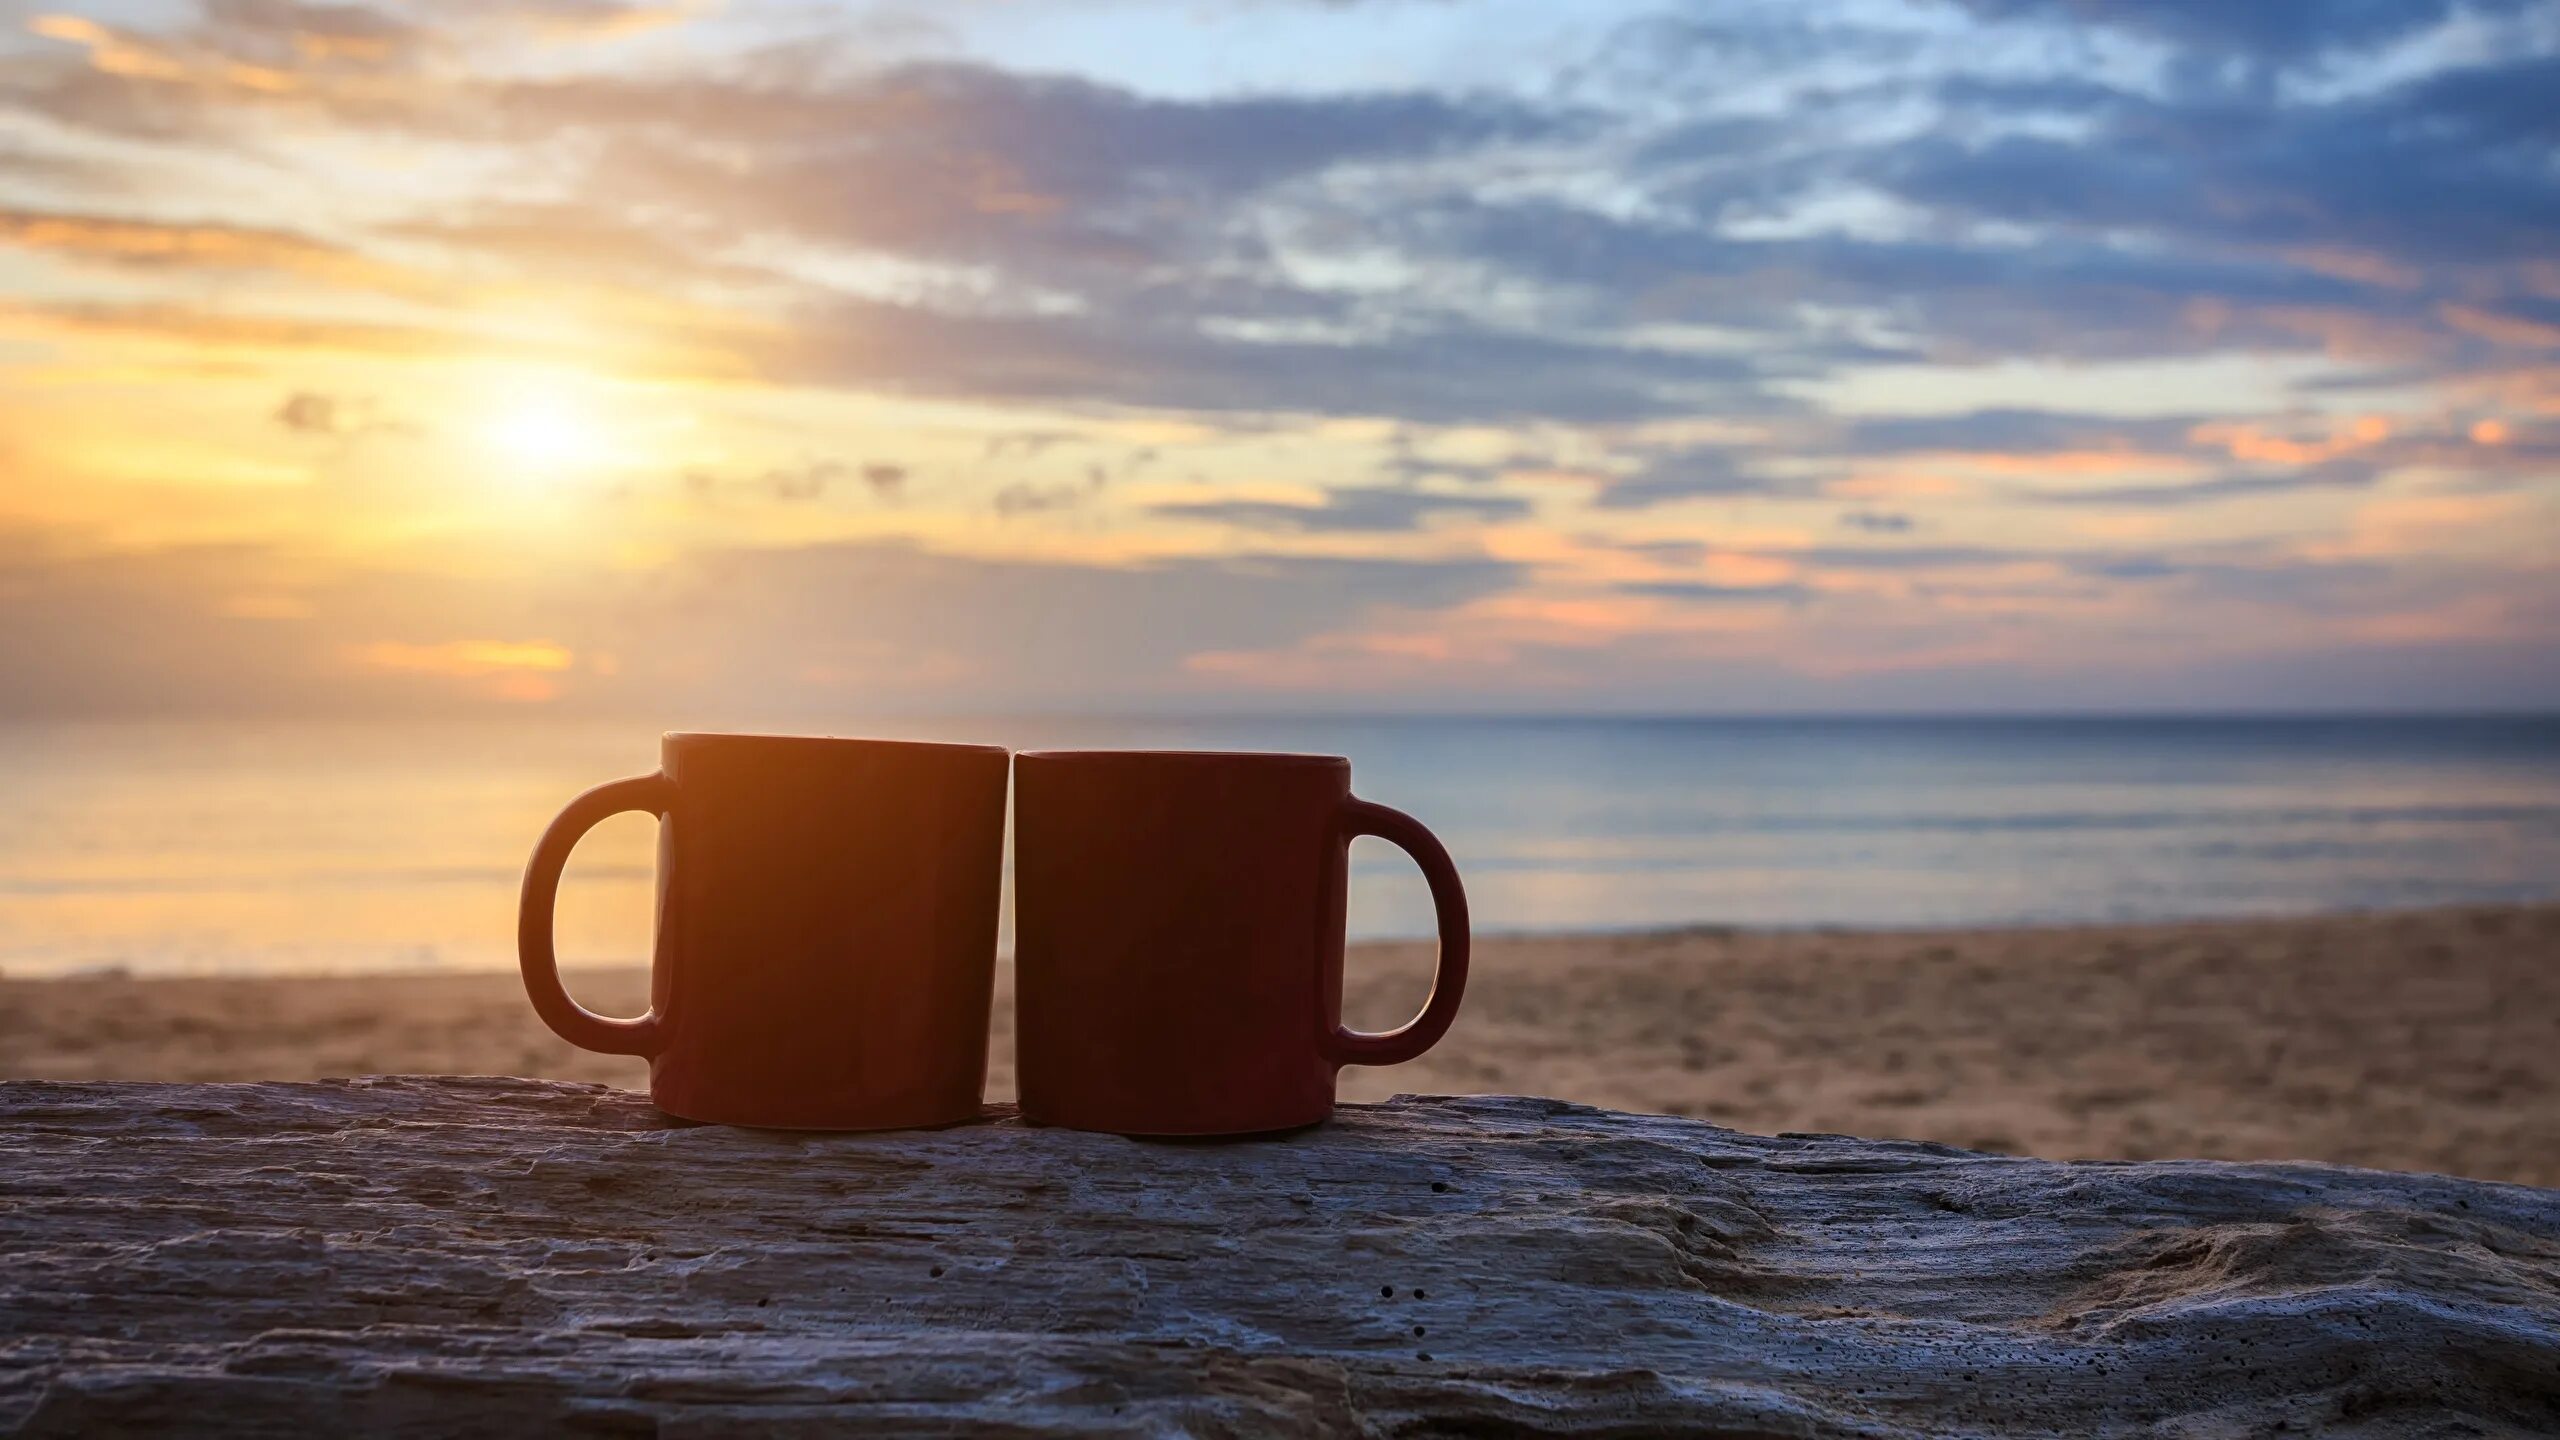 Картинка утро. Утро на море. Чашка кофе на берегу моря. Доброе утро море. Кофе на берегу моря.